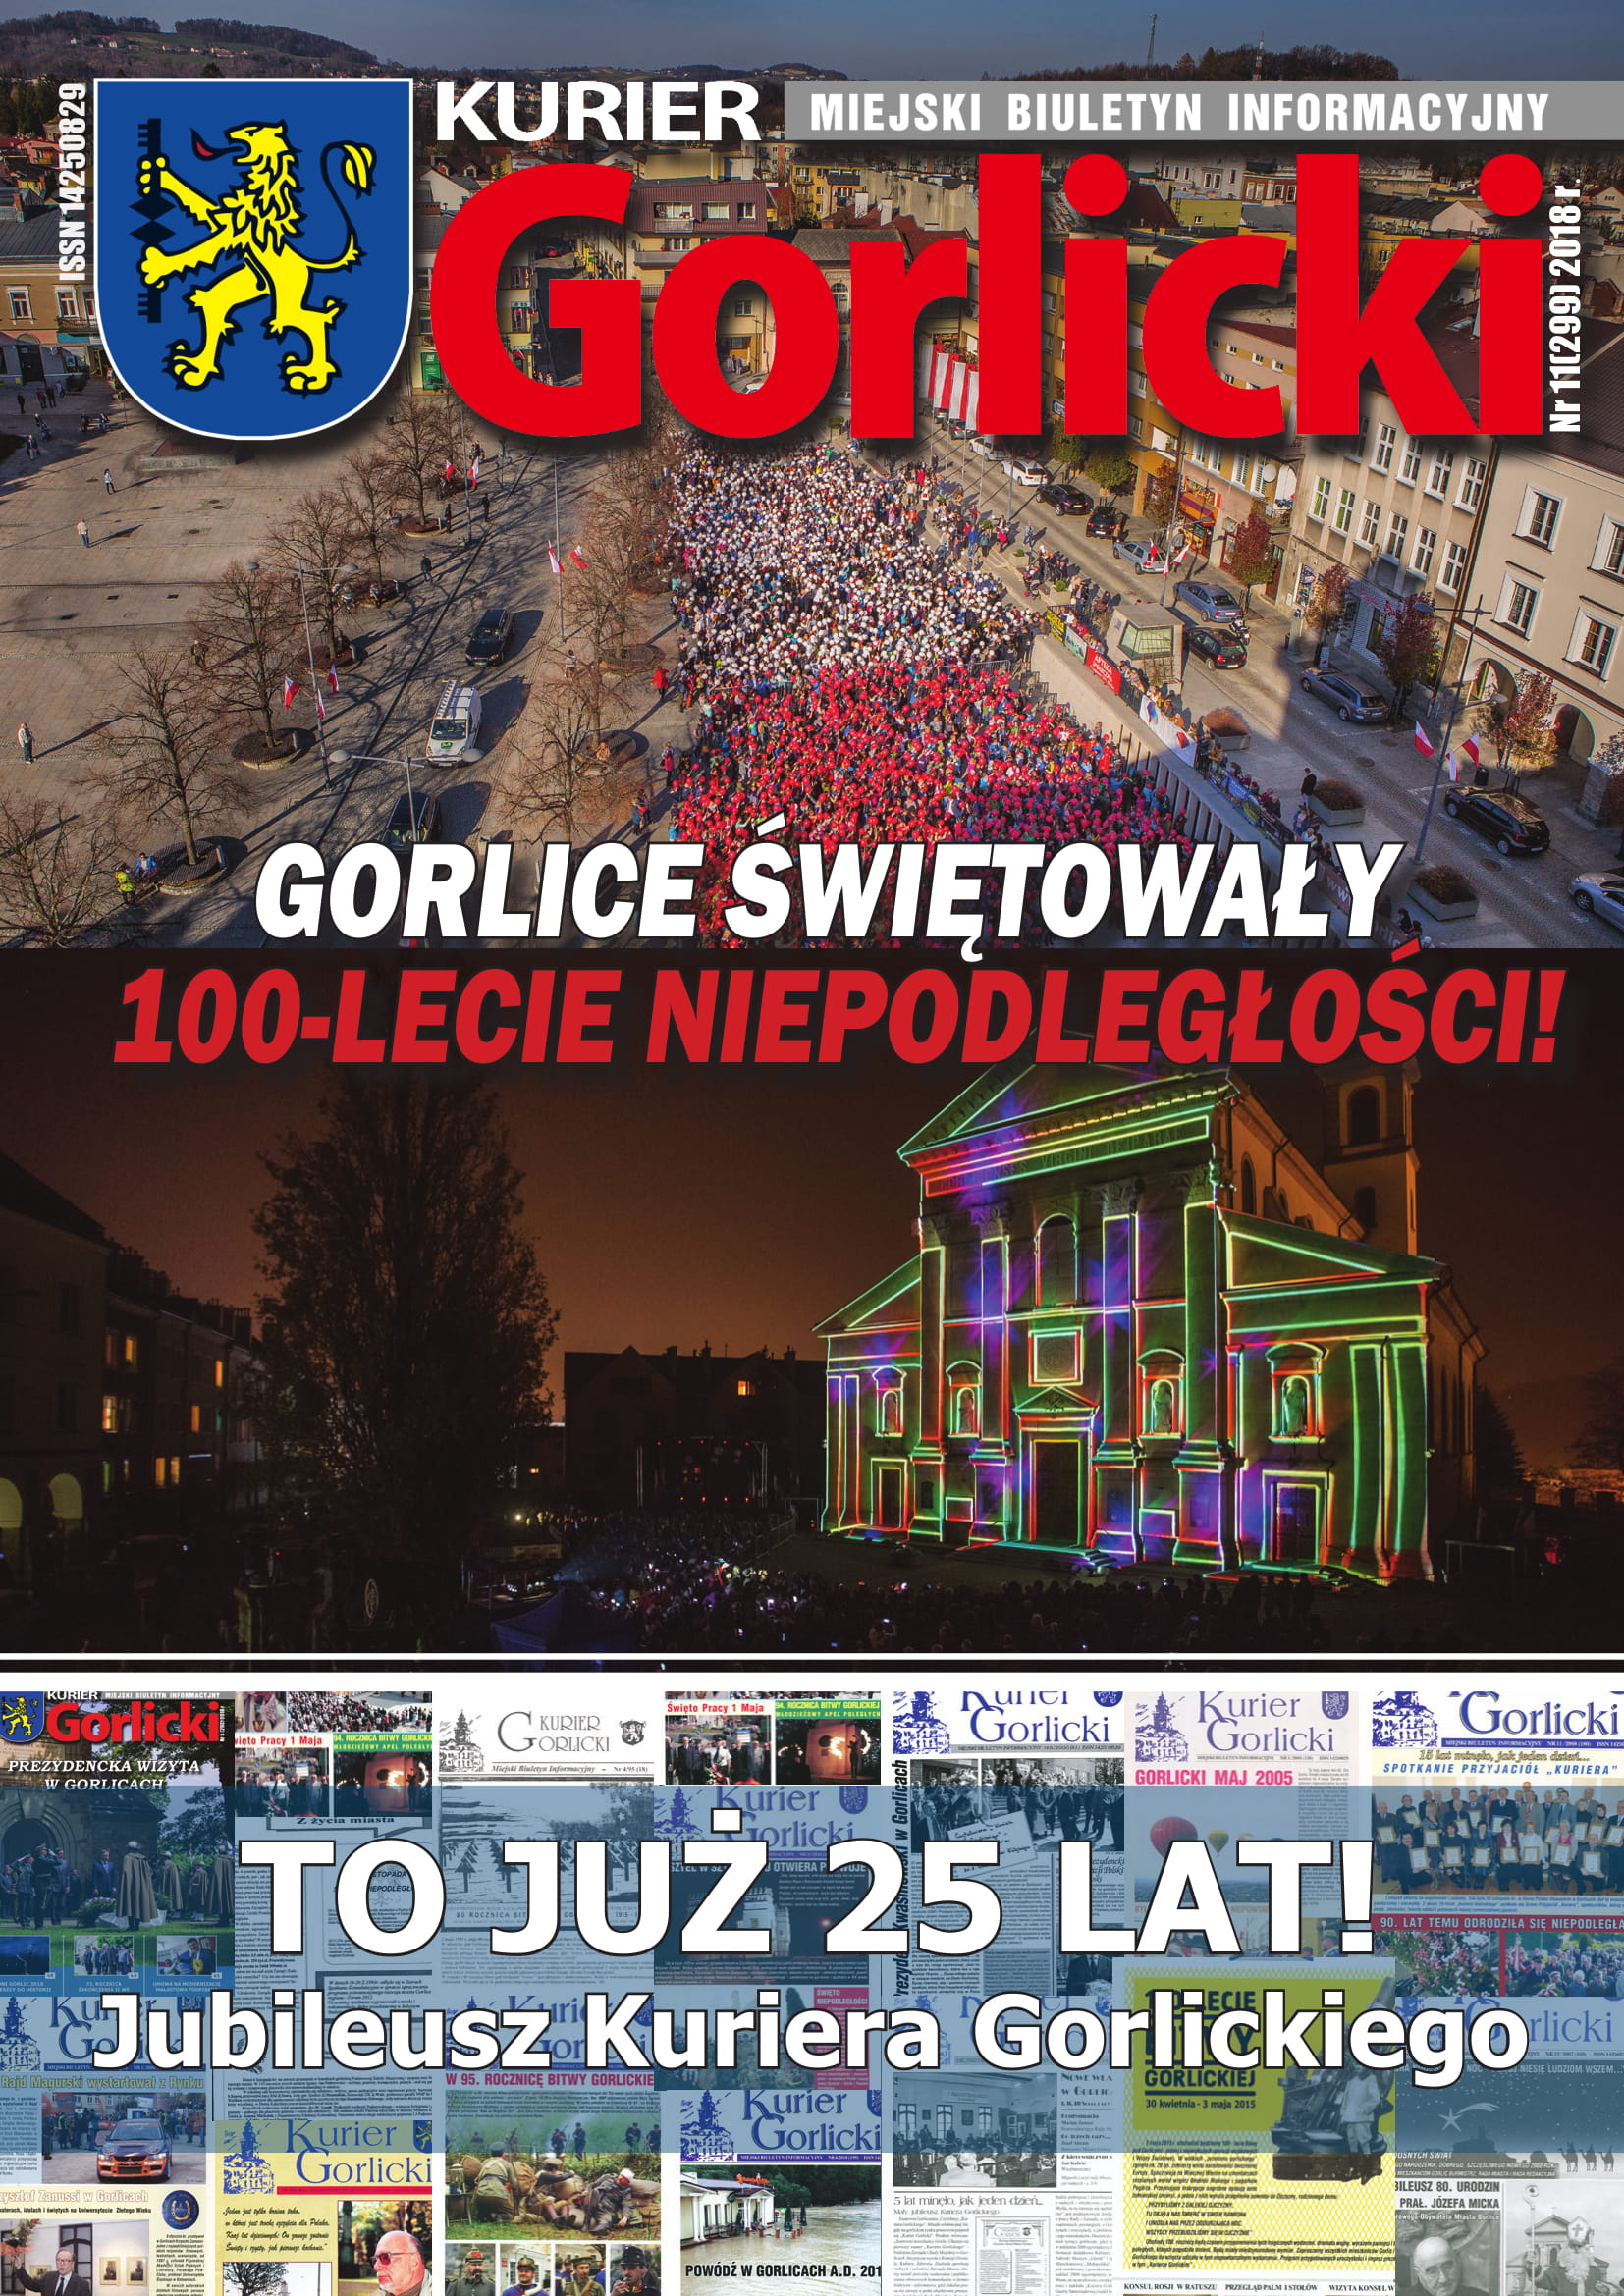 Kurier Gorlicki świętuje 25 lat!